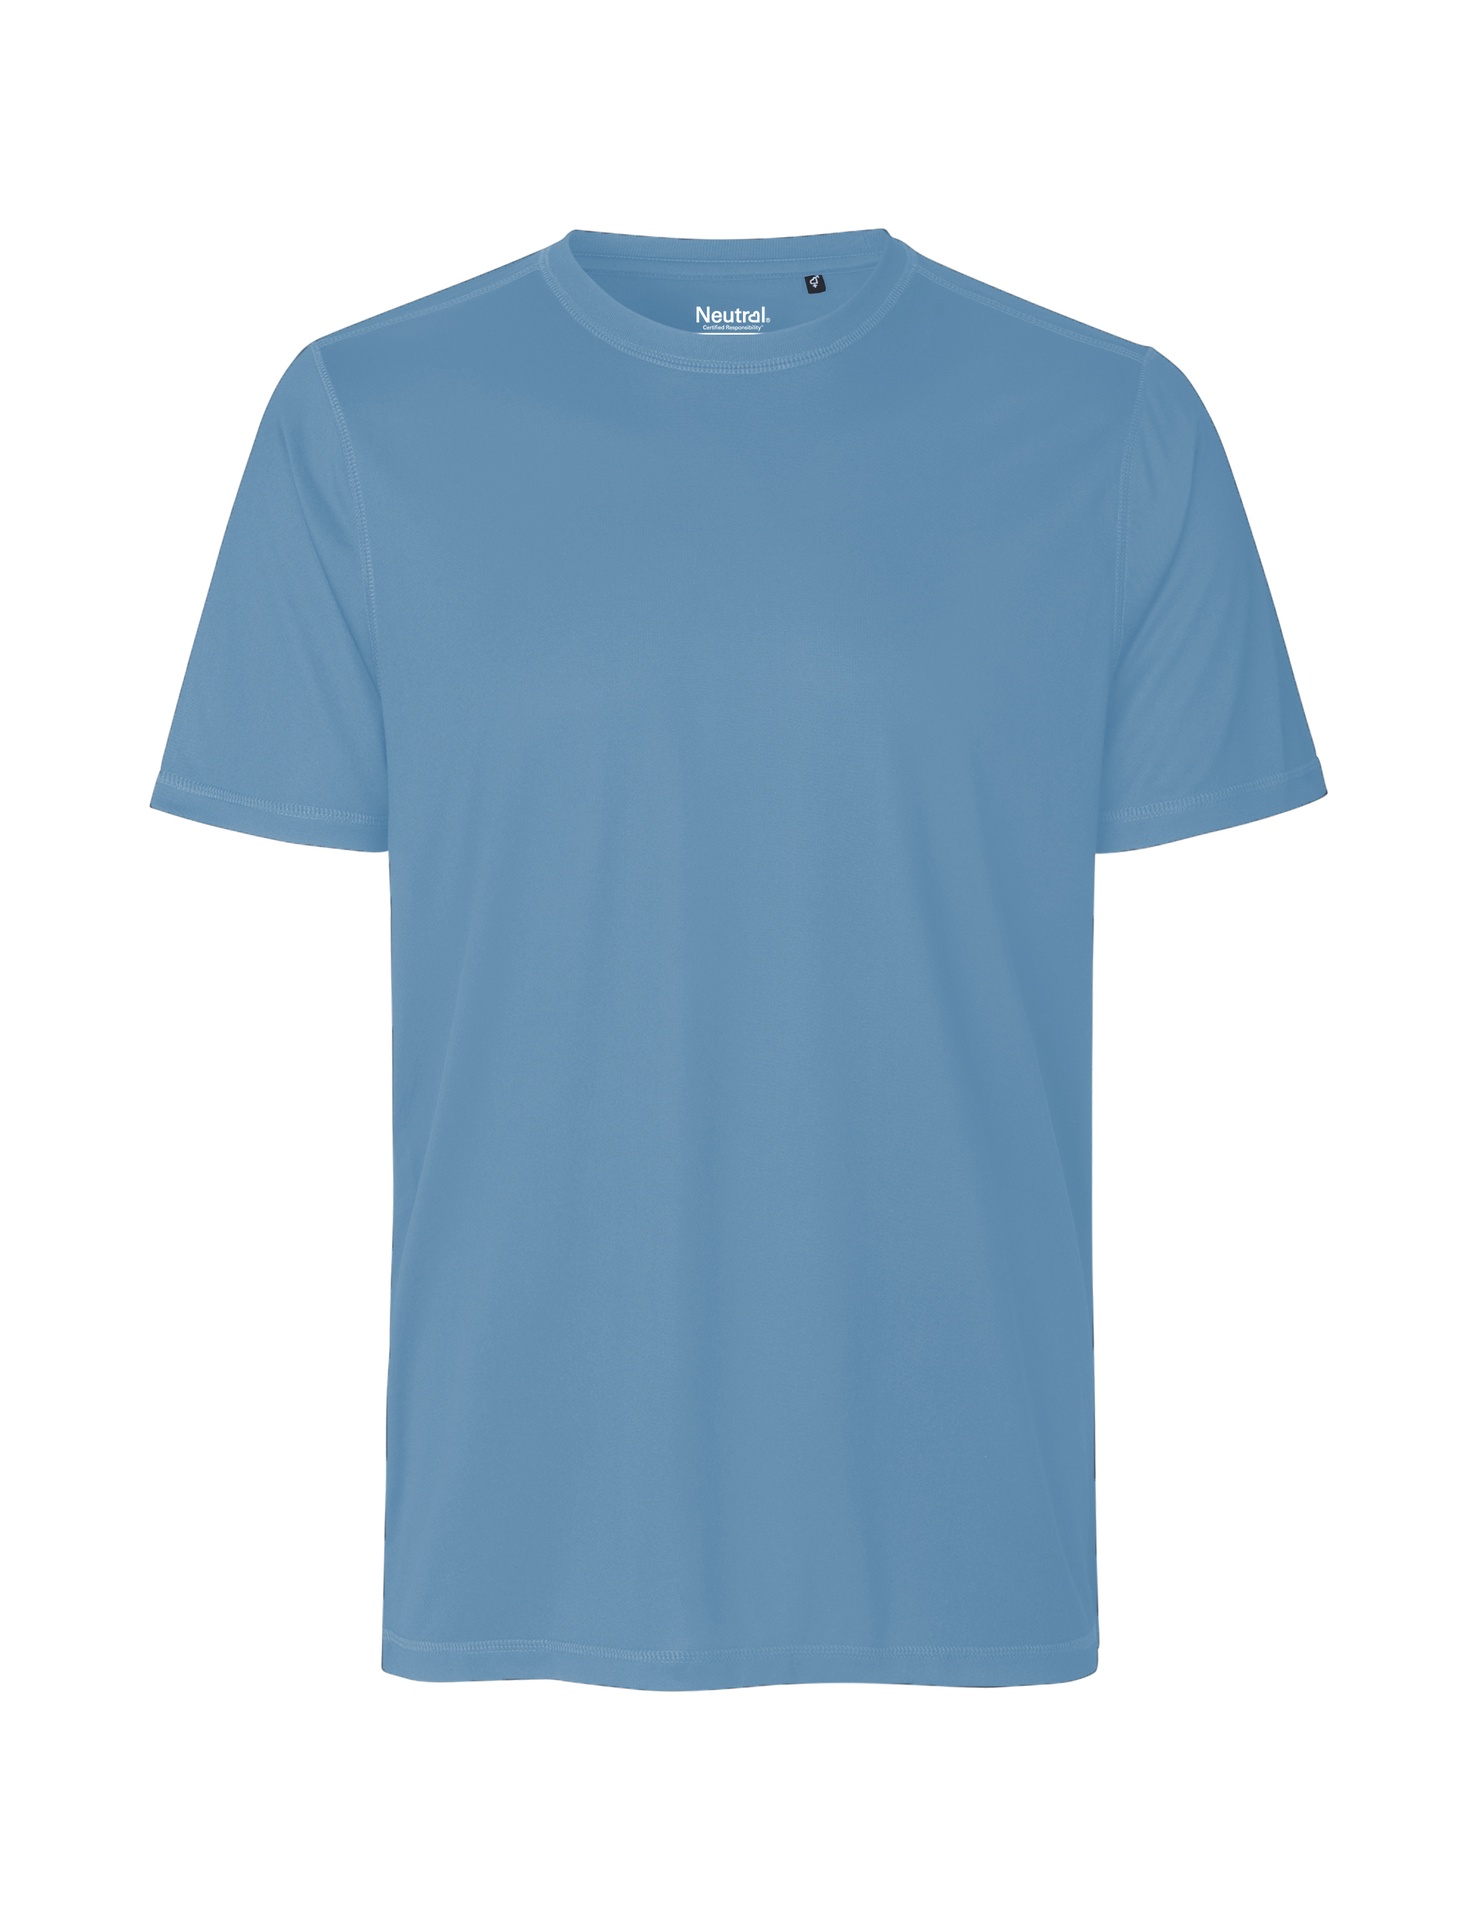 [PR/03805] Recycled Performance T-Shirt (Dusty Indigo 41, XL)